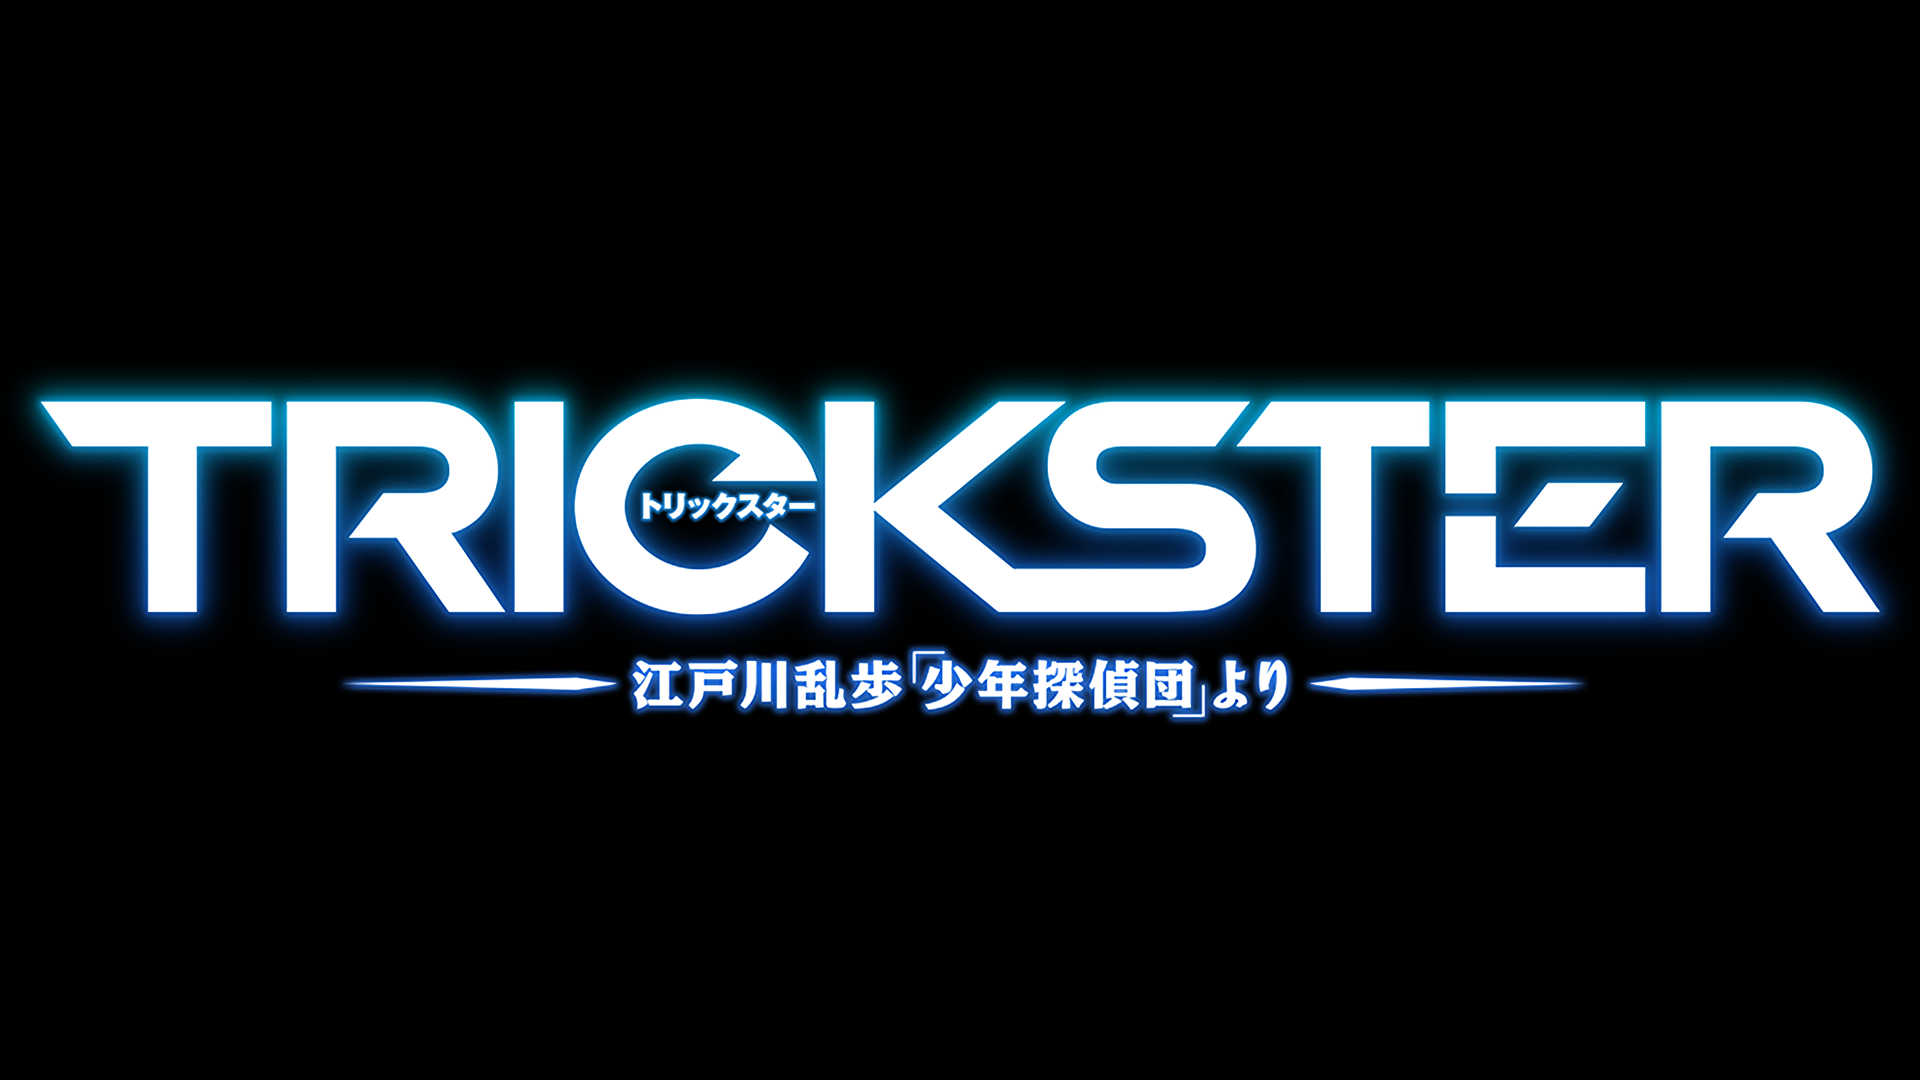 Trickster | Edogawa ranpo, Anime artwork, Anime